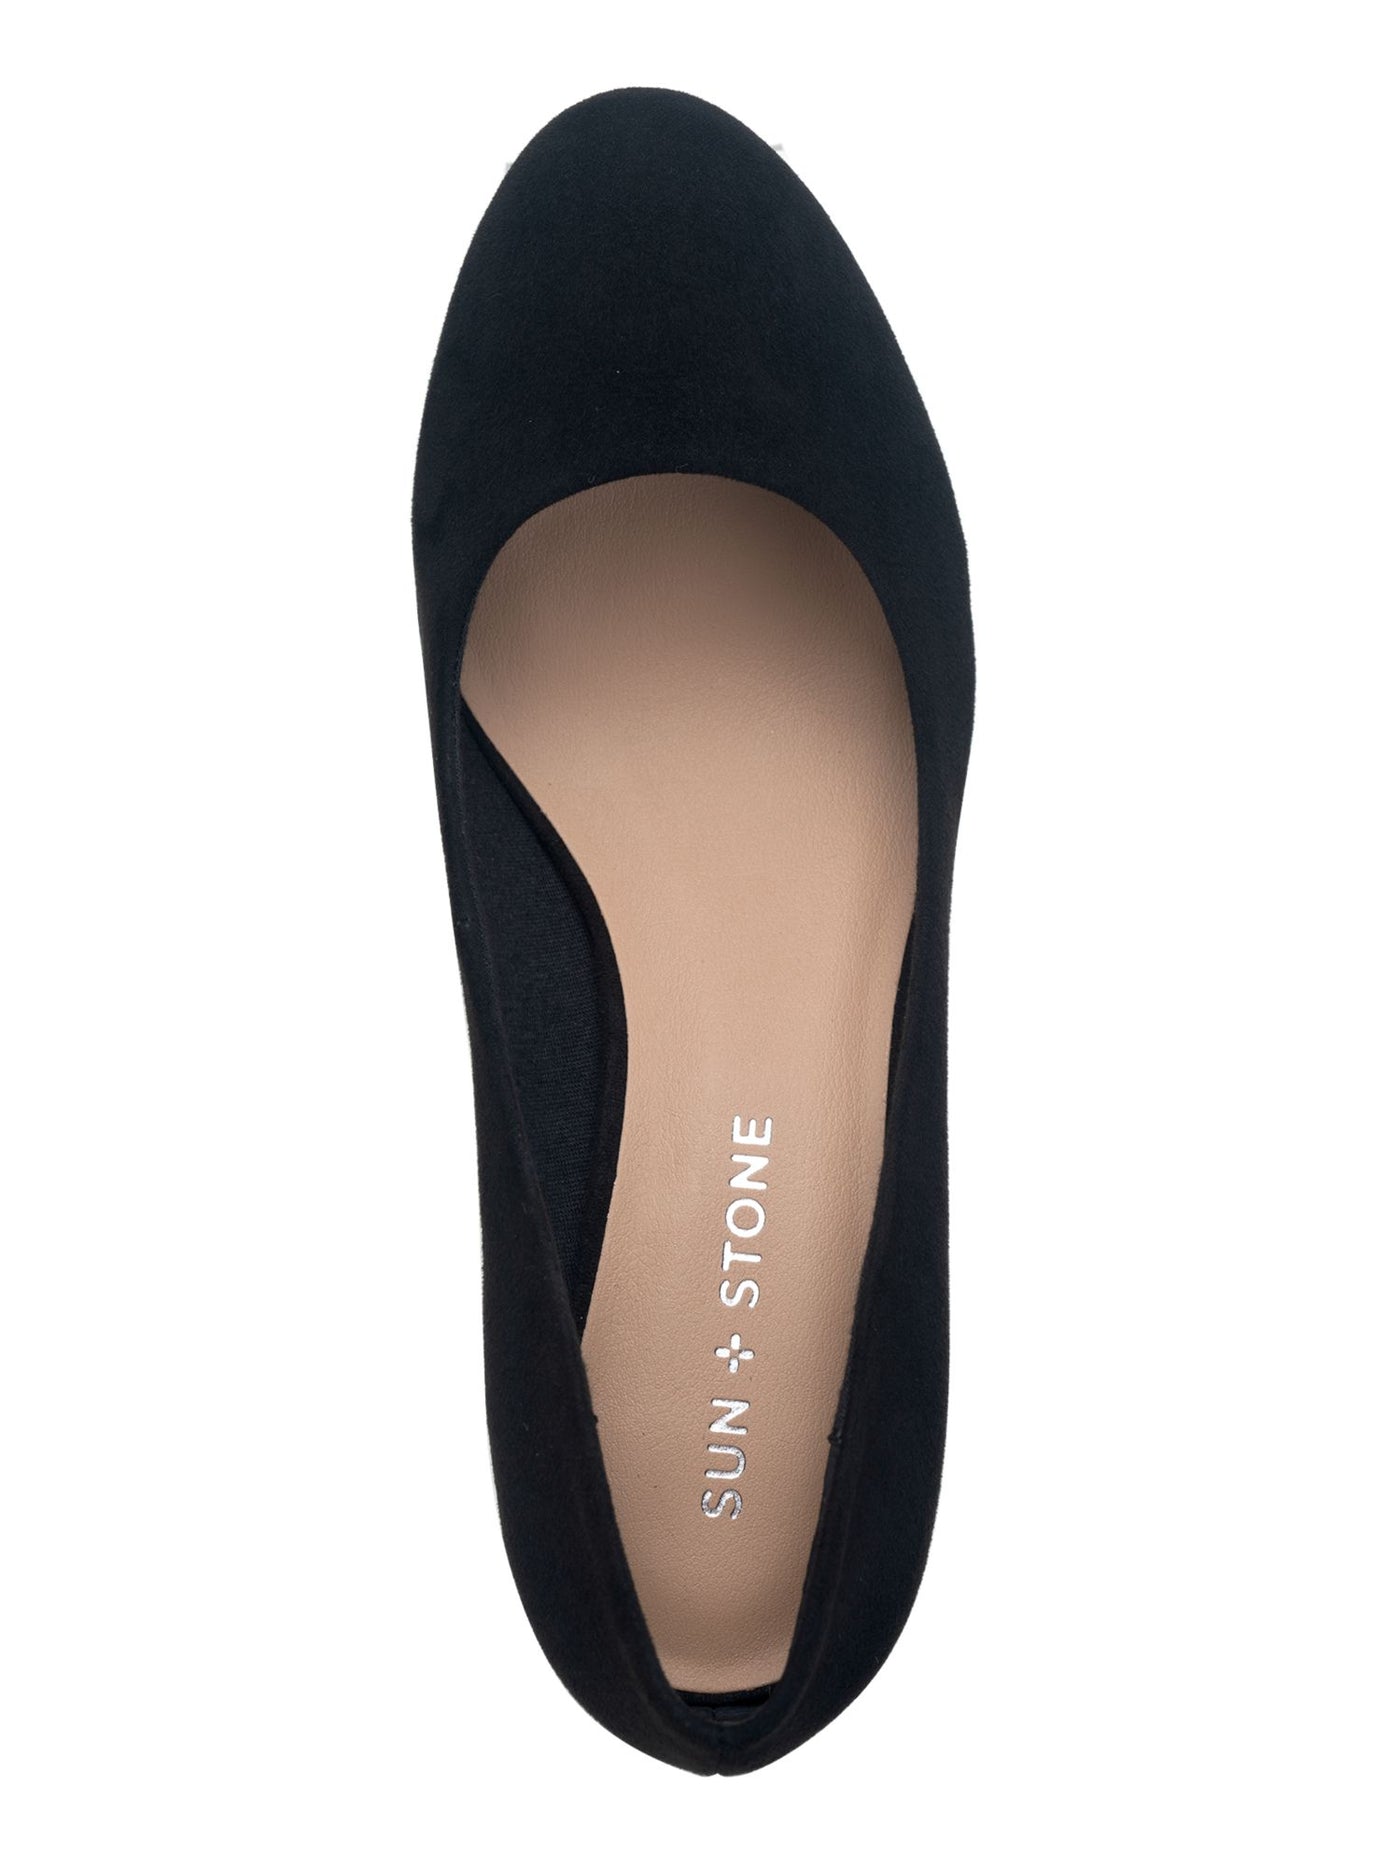 SUN STONE Womens Black Cushioned Breathable Felix Round Toe Cone Heel Slip On Dress Pumps Shoes 7.5 M